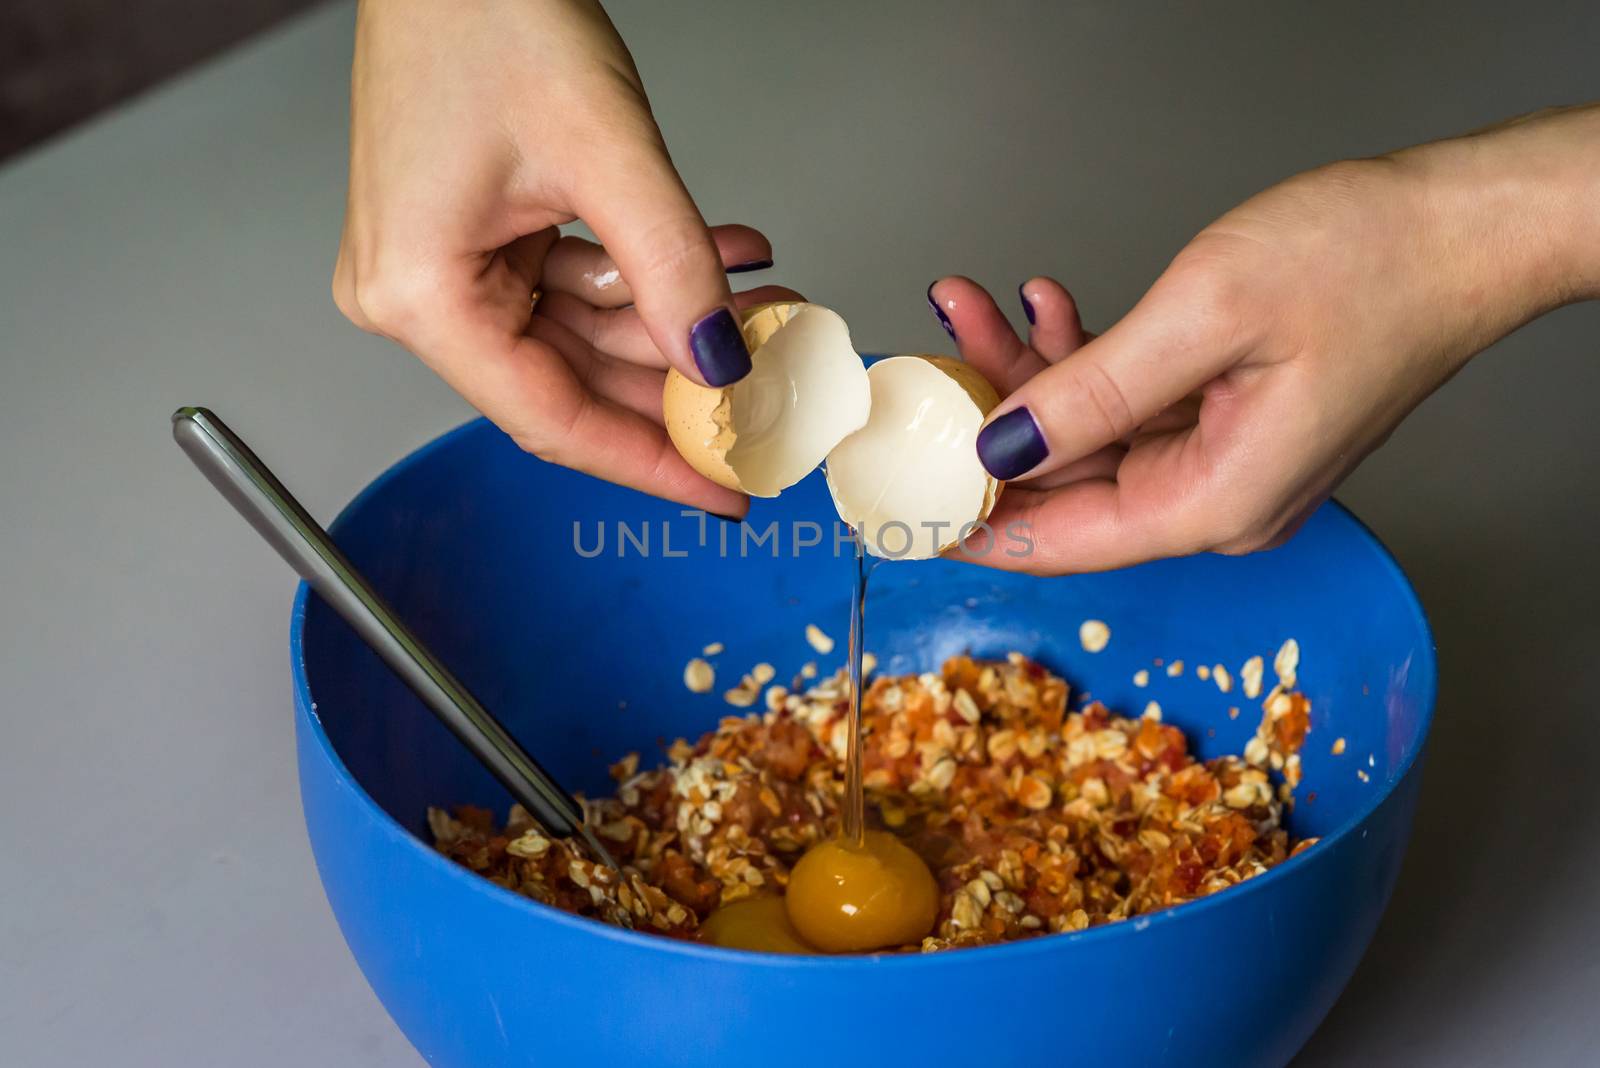 hand poured down raw egg with shell by okskukuruza